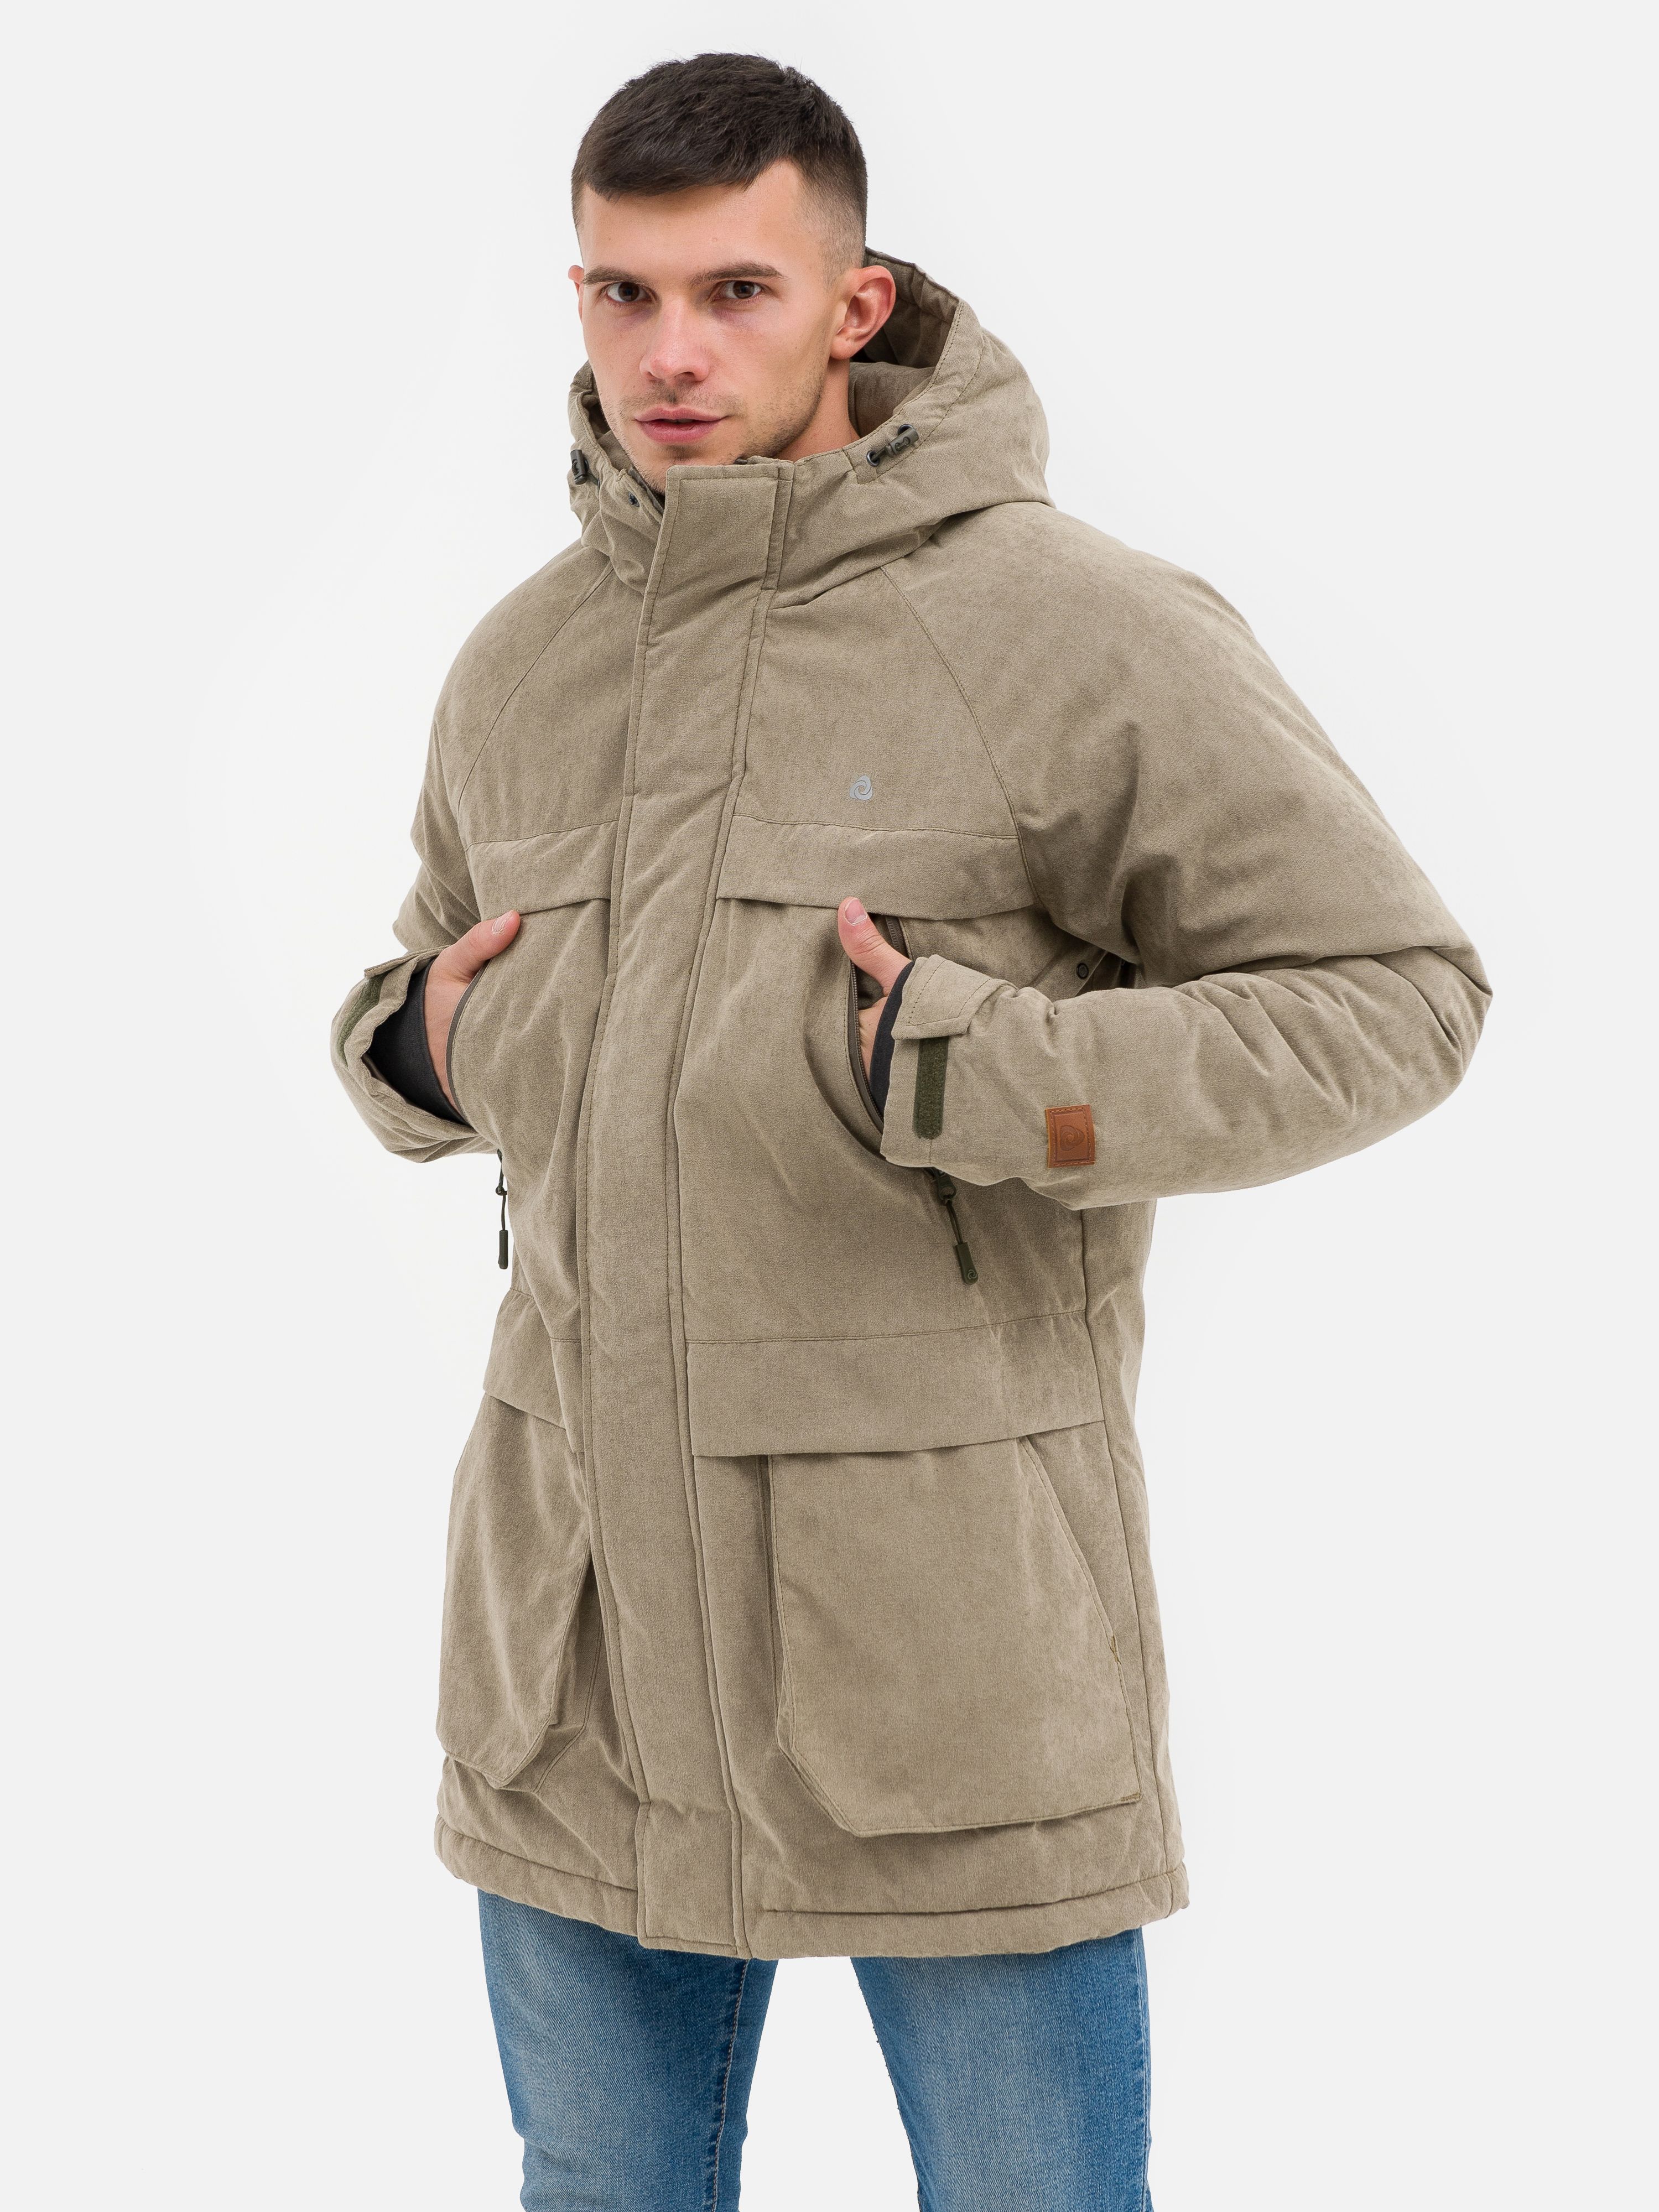 Зимняя мужская мембранная куртка Утес, серый песок